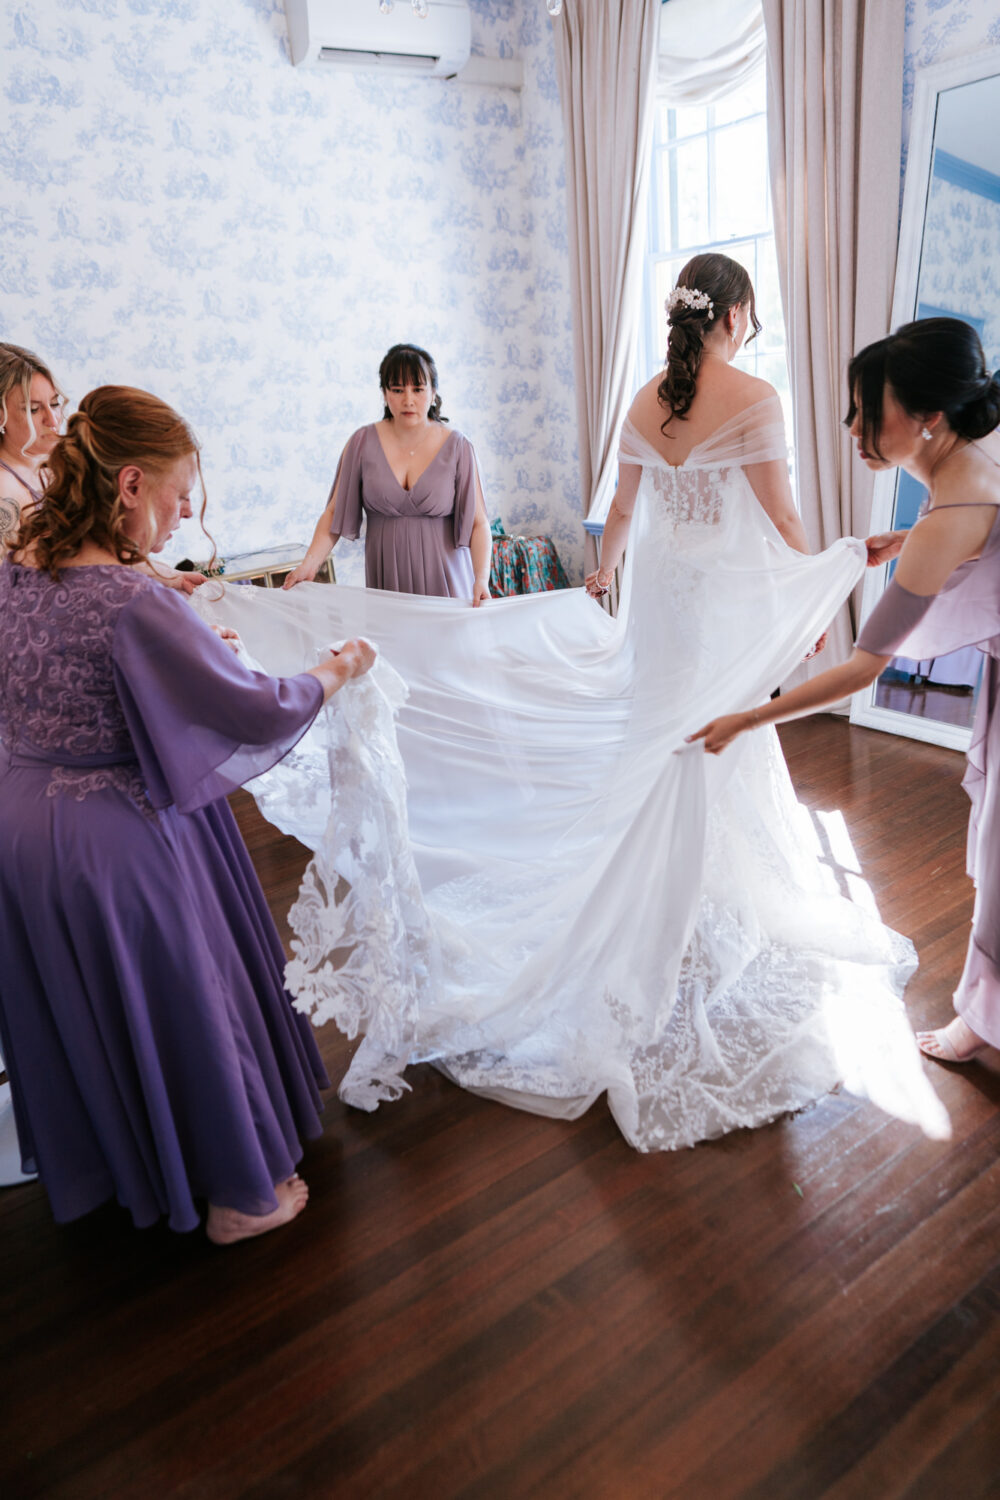 bridesmaids helping bride get ready in her wedding dress